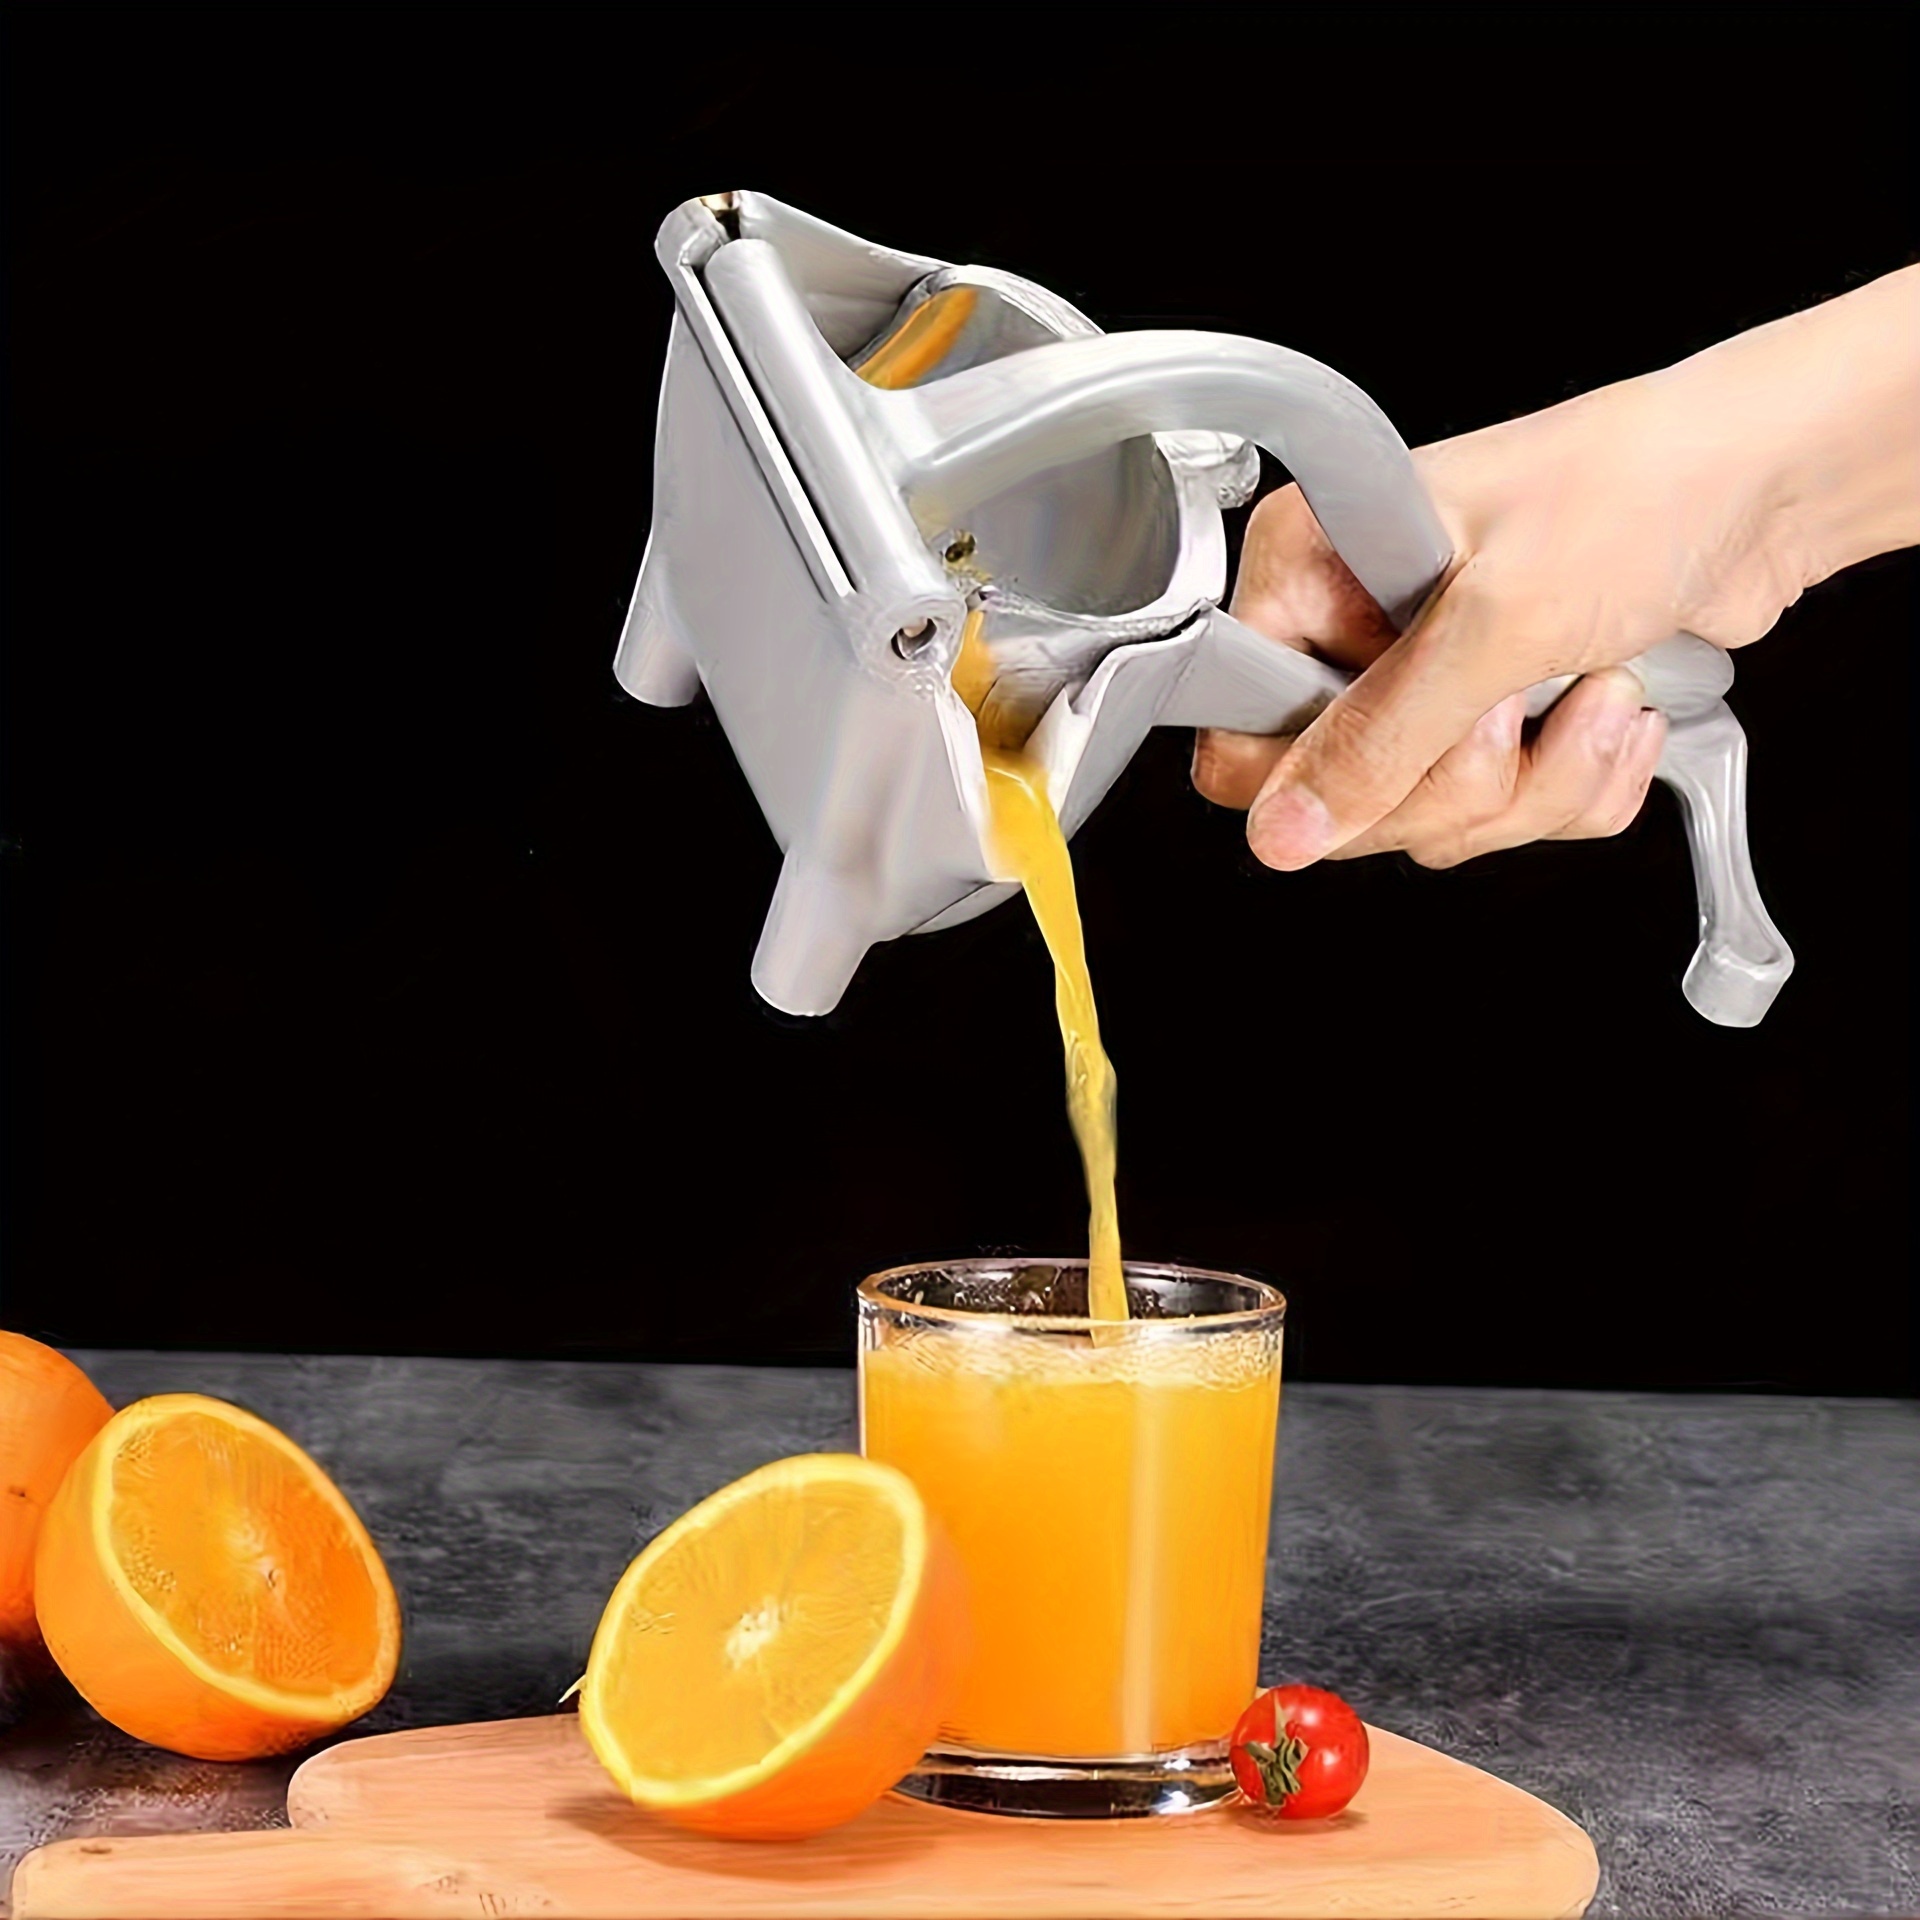 Juice Squeezer Manual Fruit Juicer, Handheld Juice Extractor, Heavy Duty  Juice Press Squeezer with Removable Strainer, Great Citrus Squeezer for